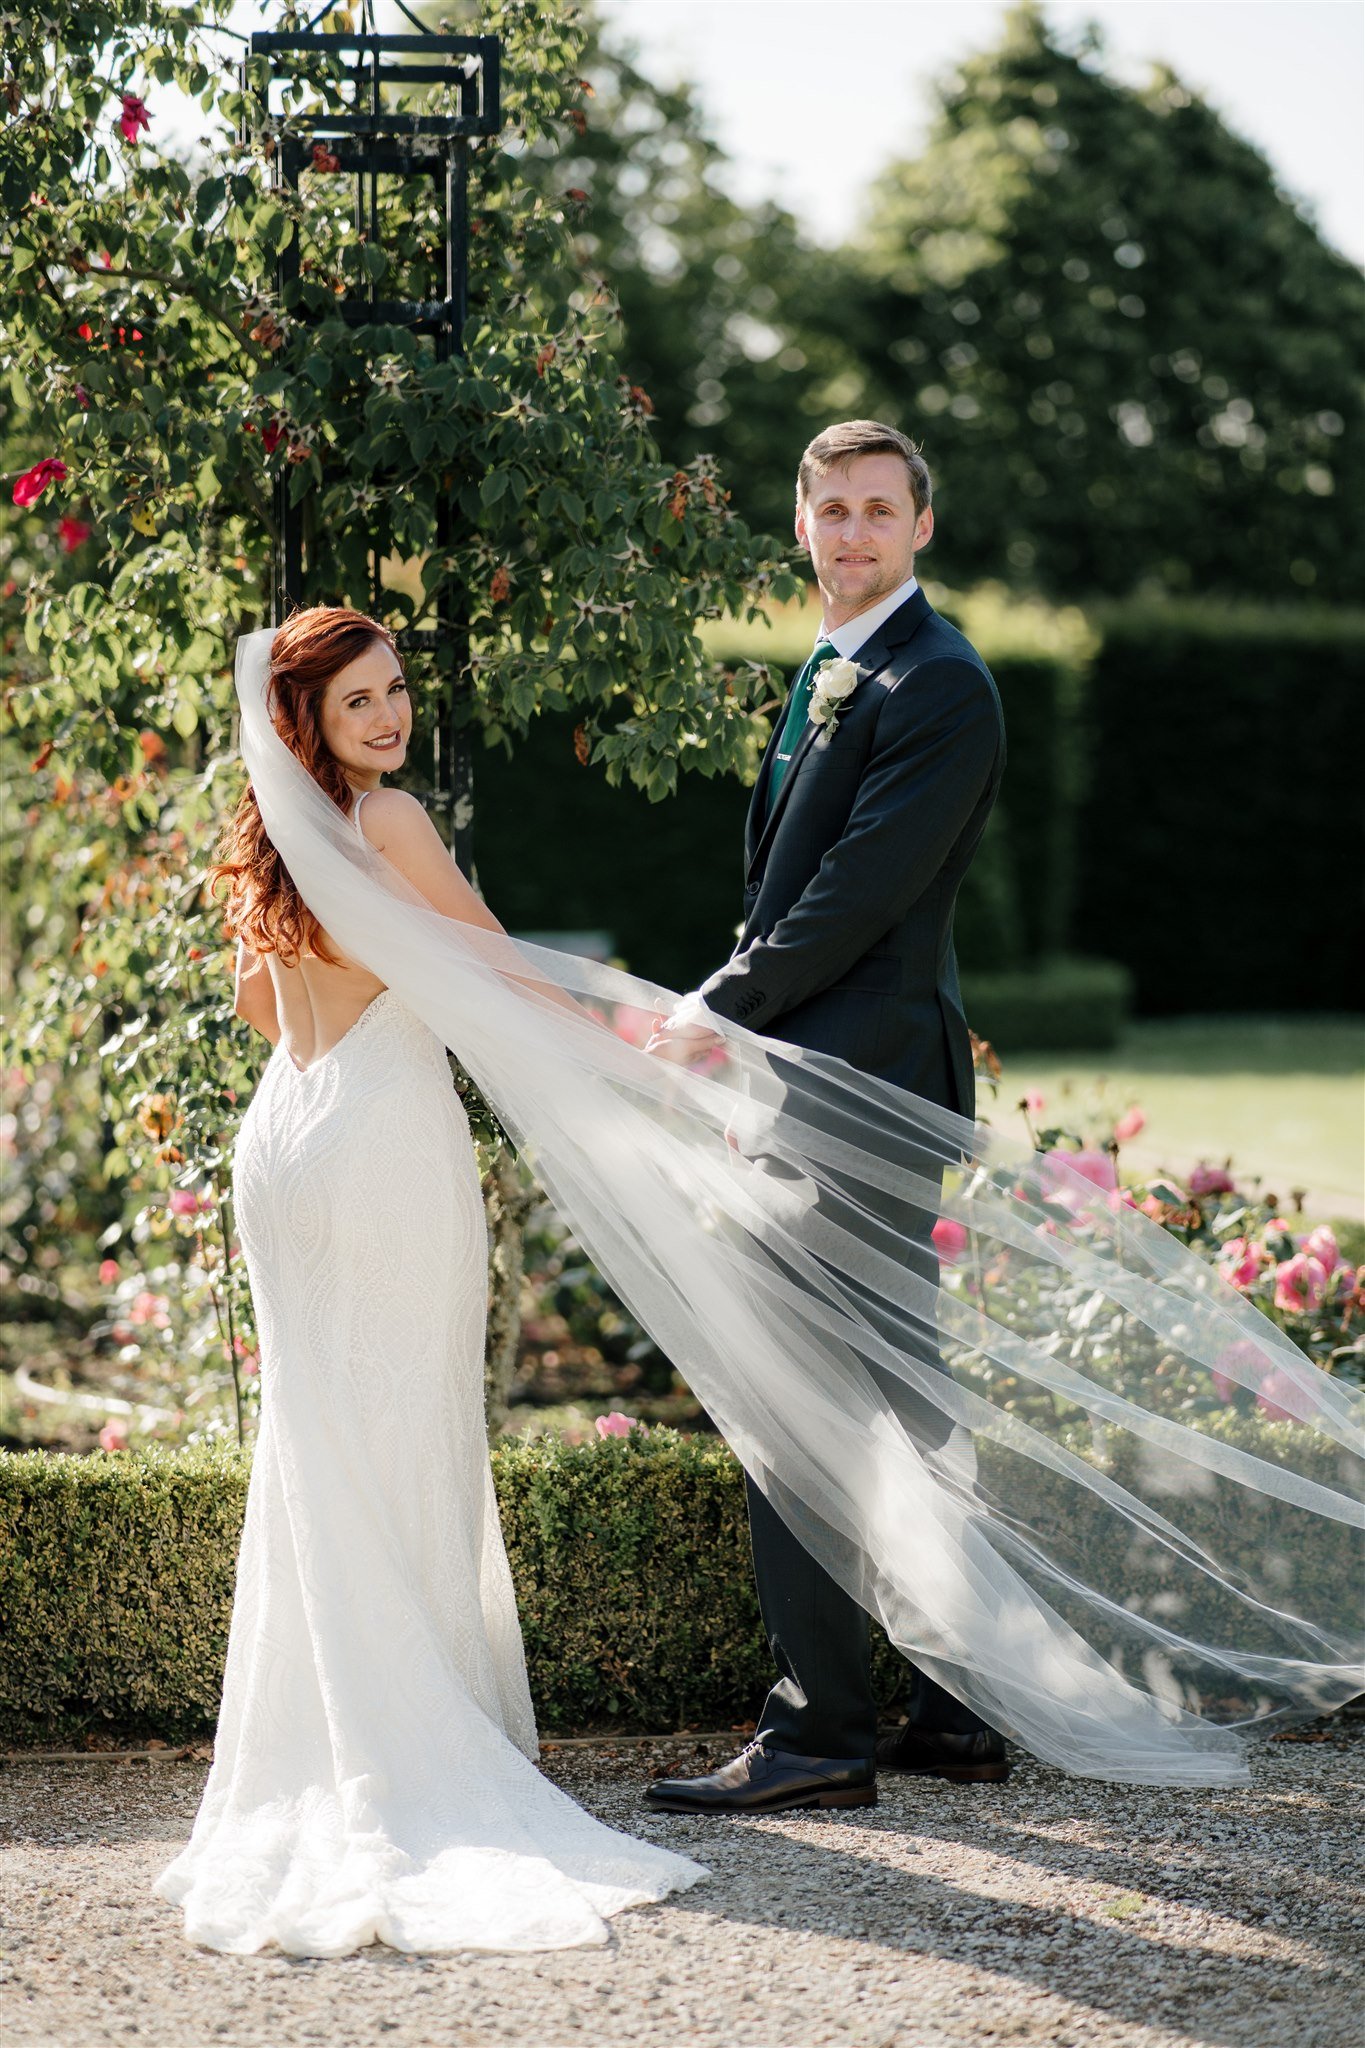 Destination wedding photography | Bushmere arms Wedding venue | auckland wedding photography | Best wedding photographer | Auckland wedding videographer | gisborne venue